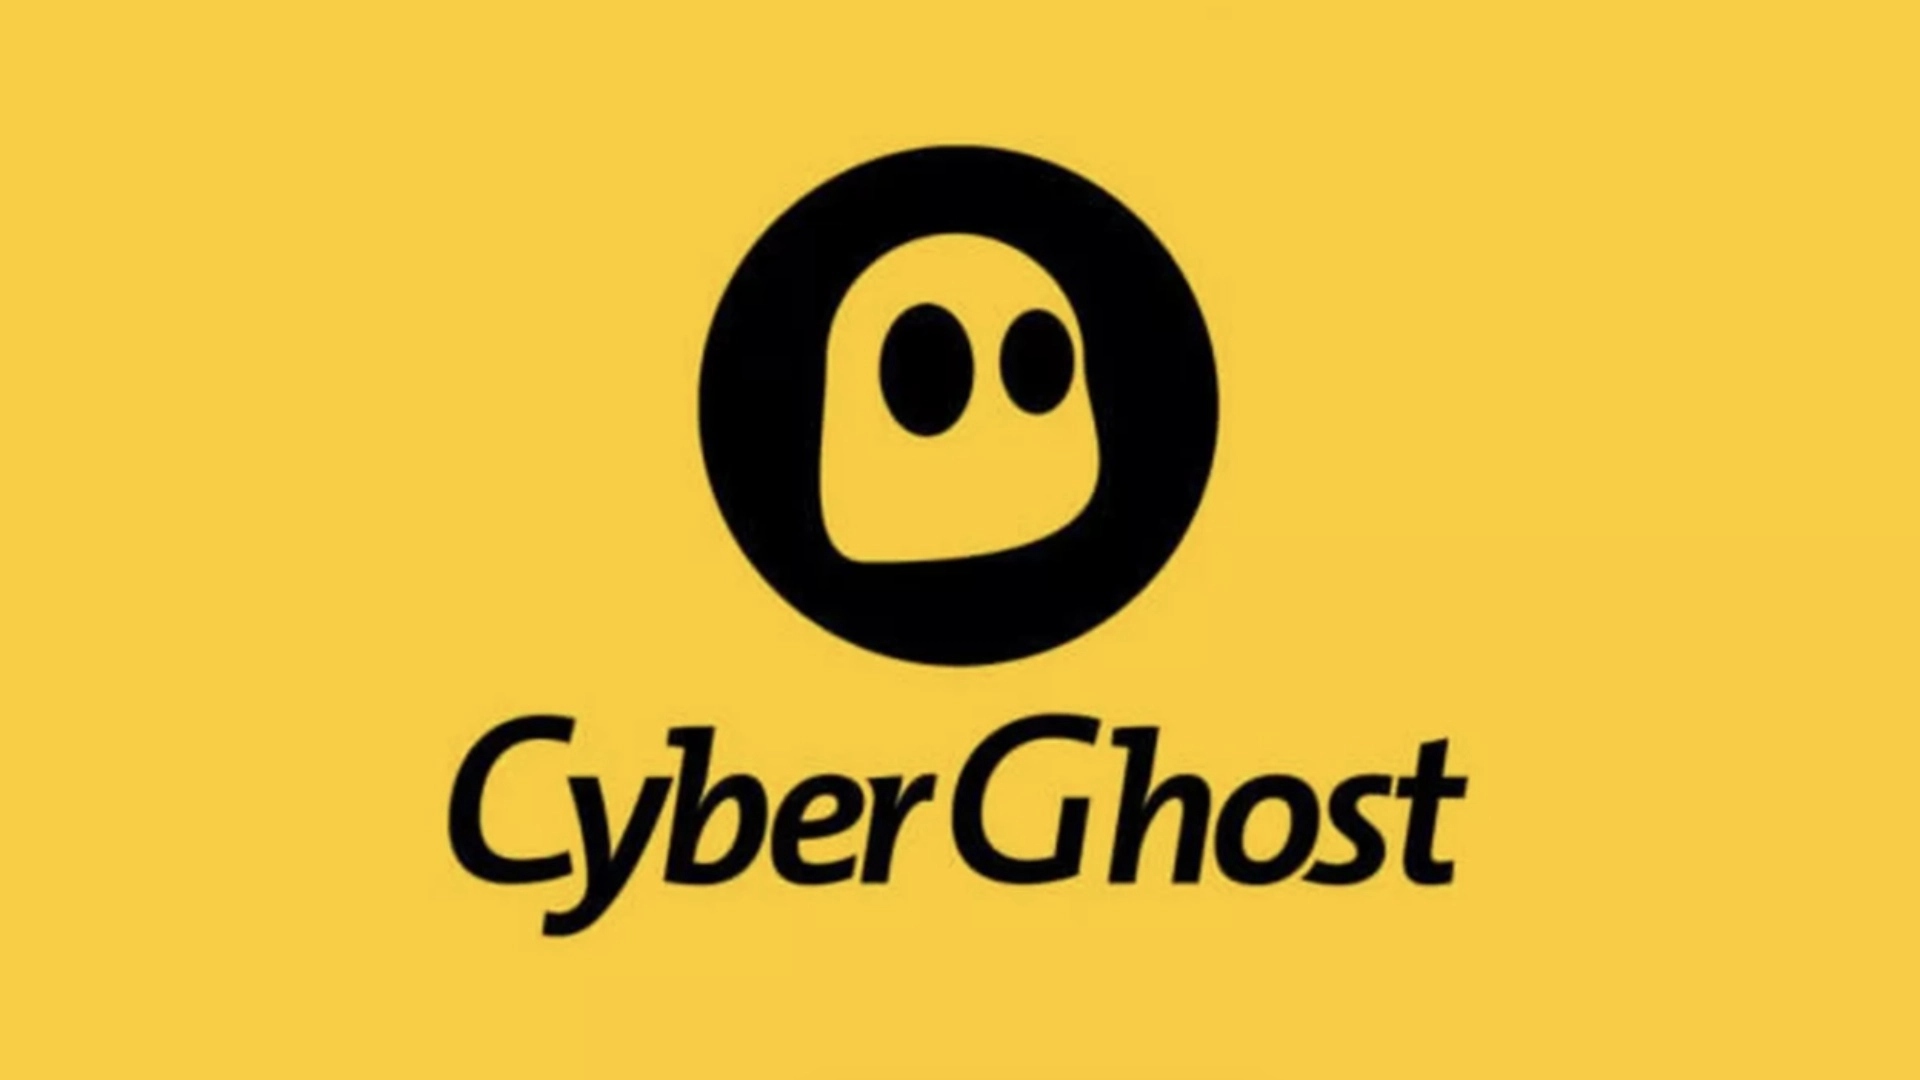 Best Mac VPN - CyberGhost. The business's spooky logo is seen on a yellow background.